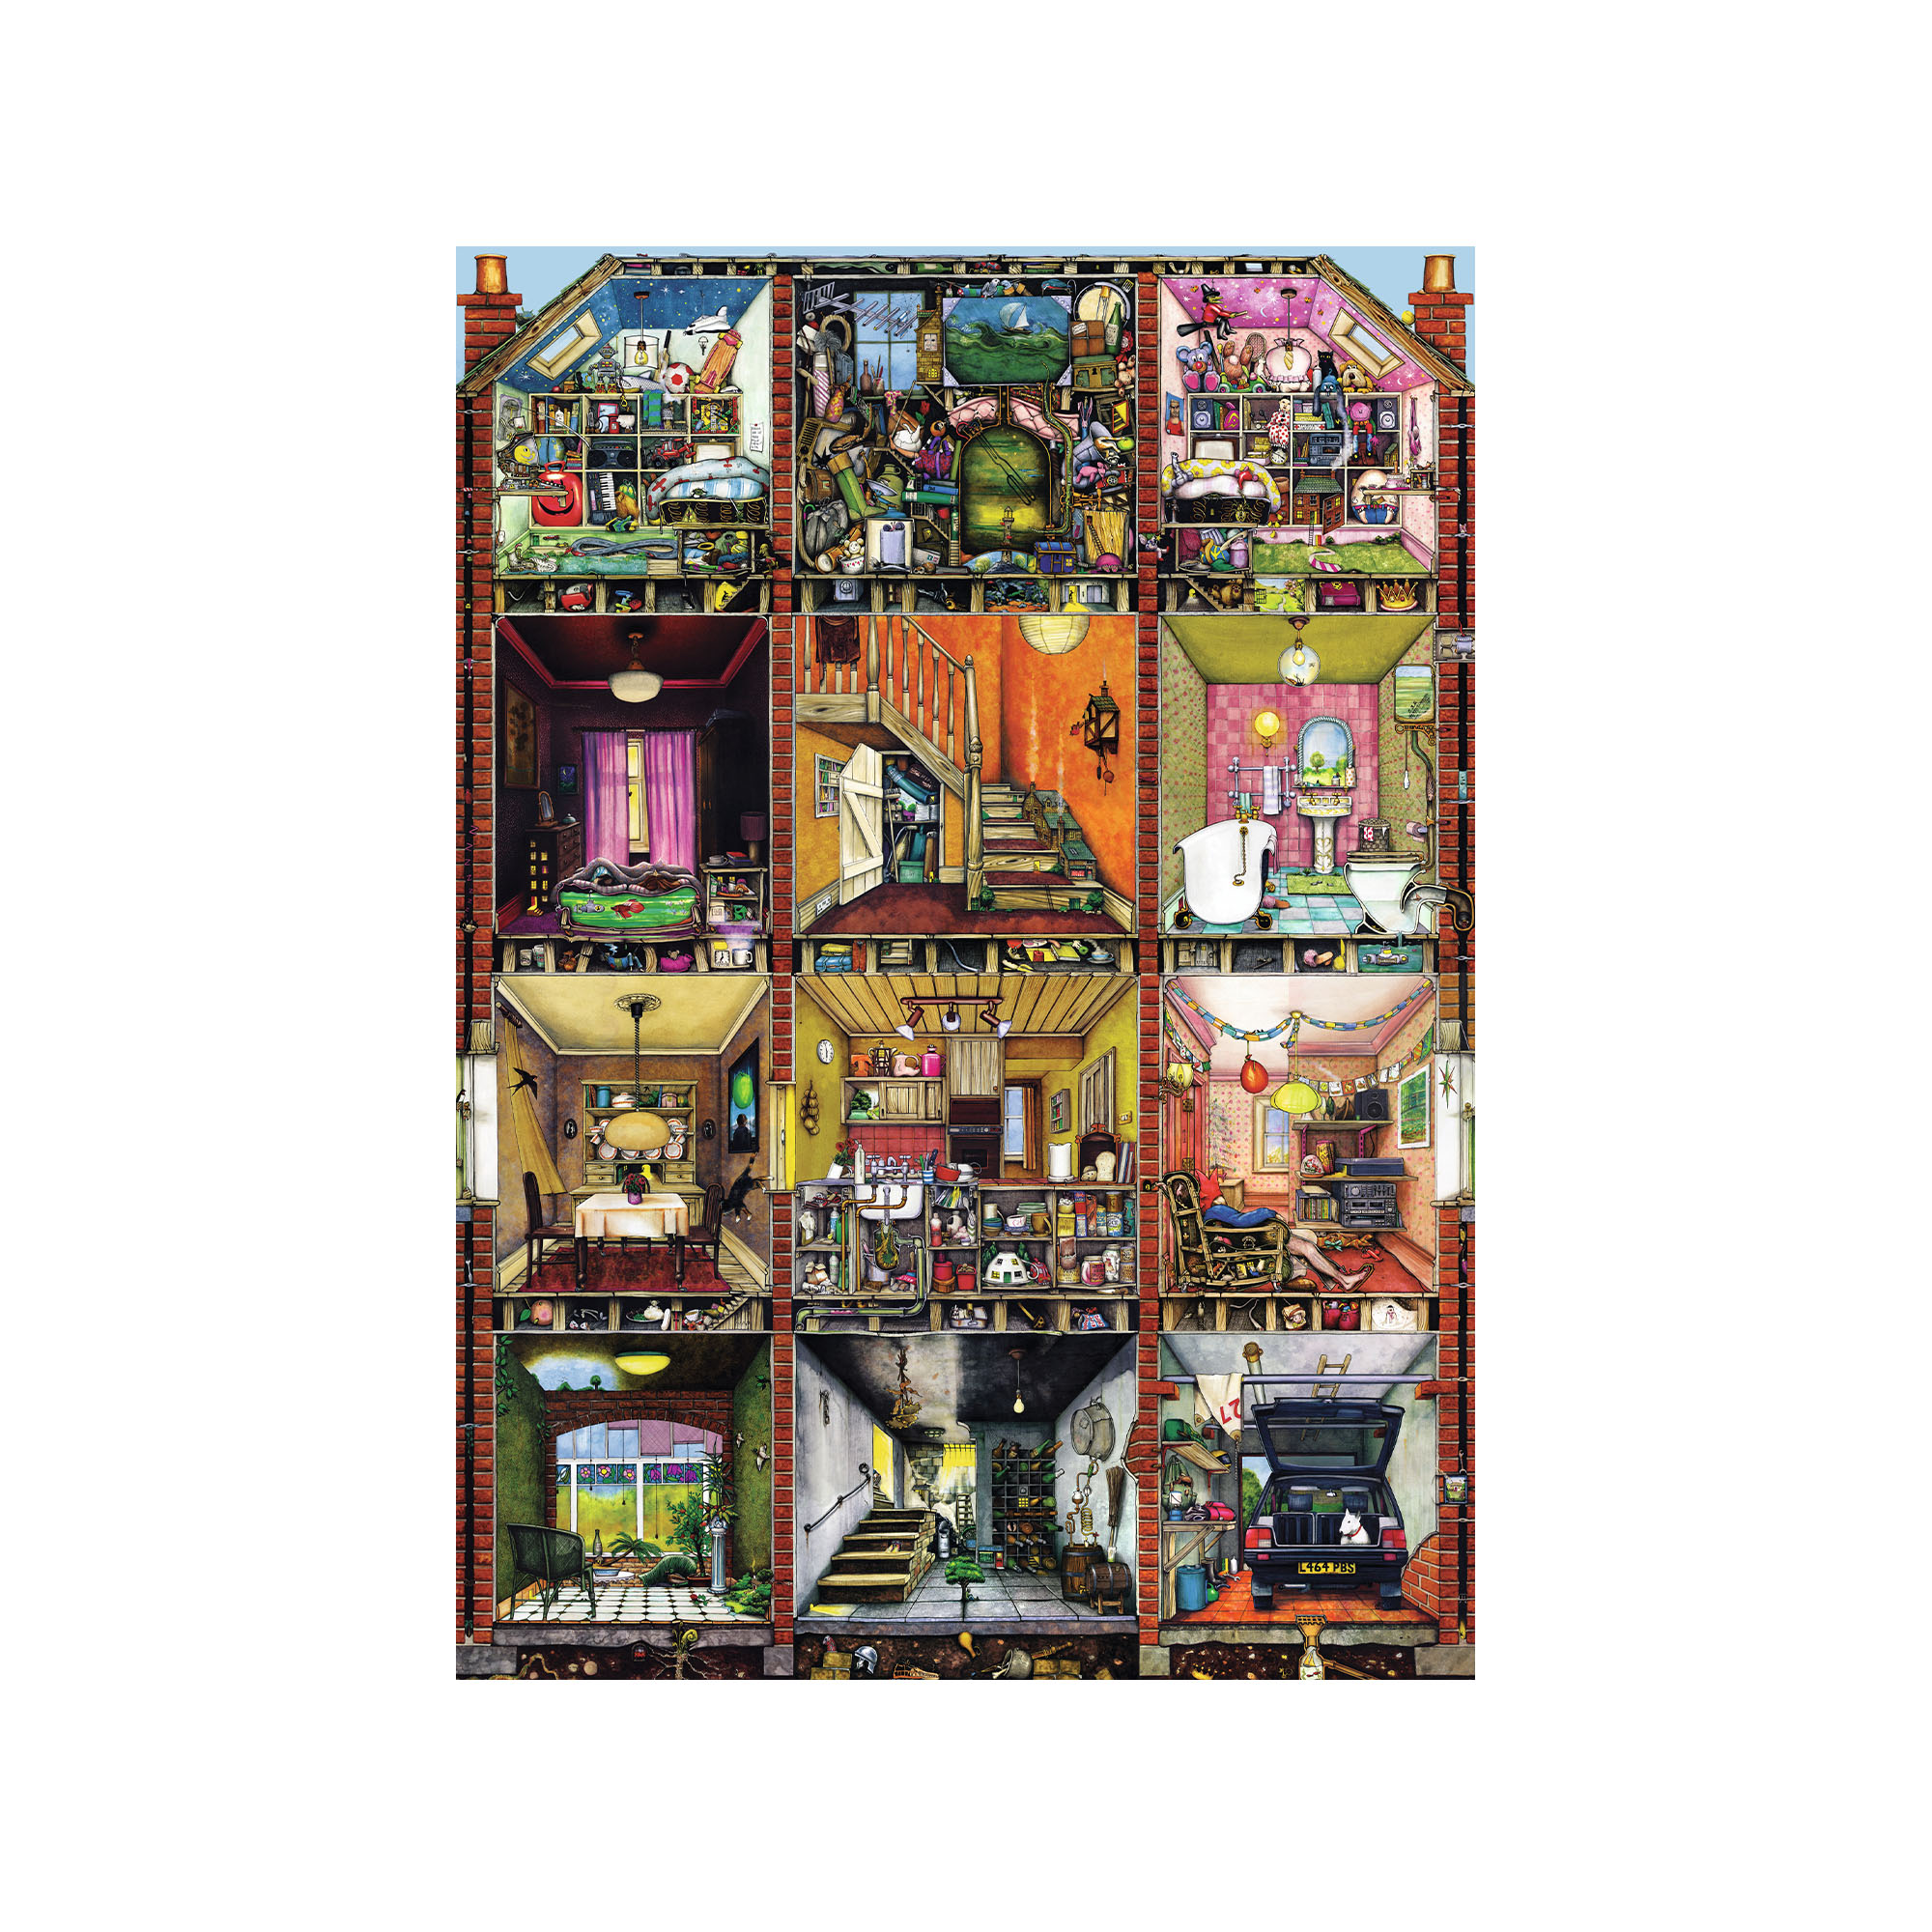 Ravensburger Puzzle 1000 pezzi 19293 - La casa bizzarra, , large